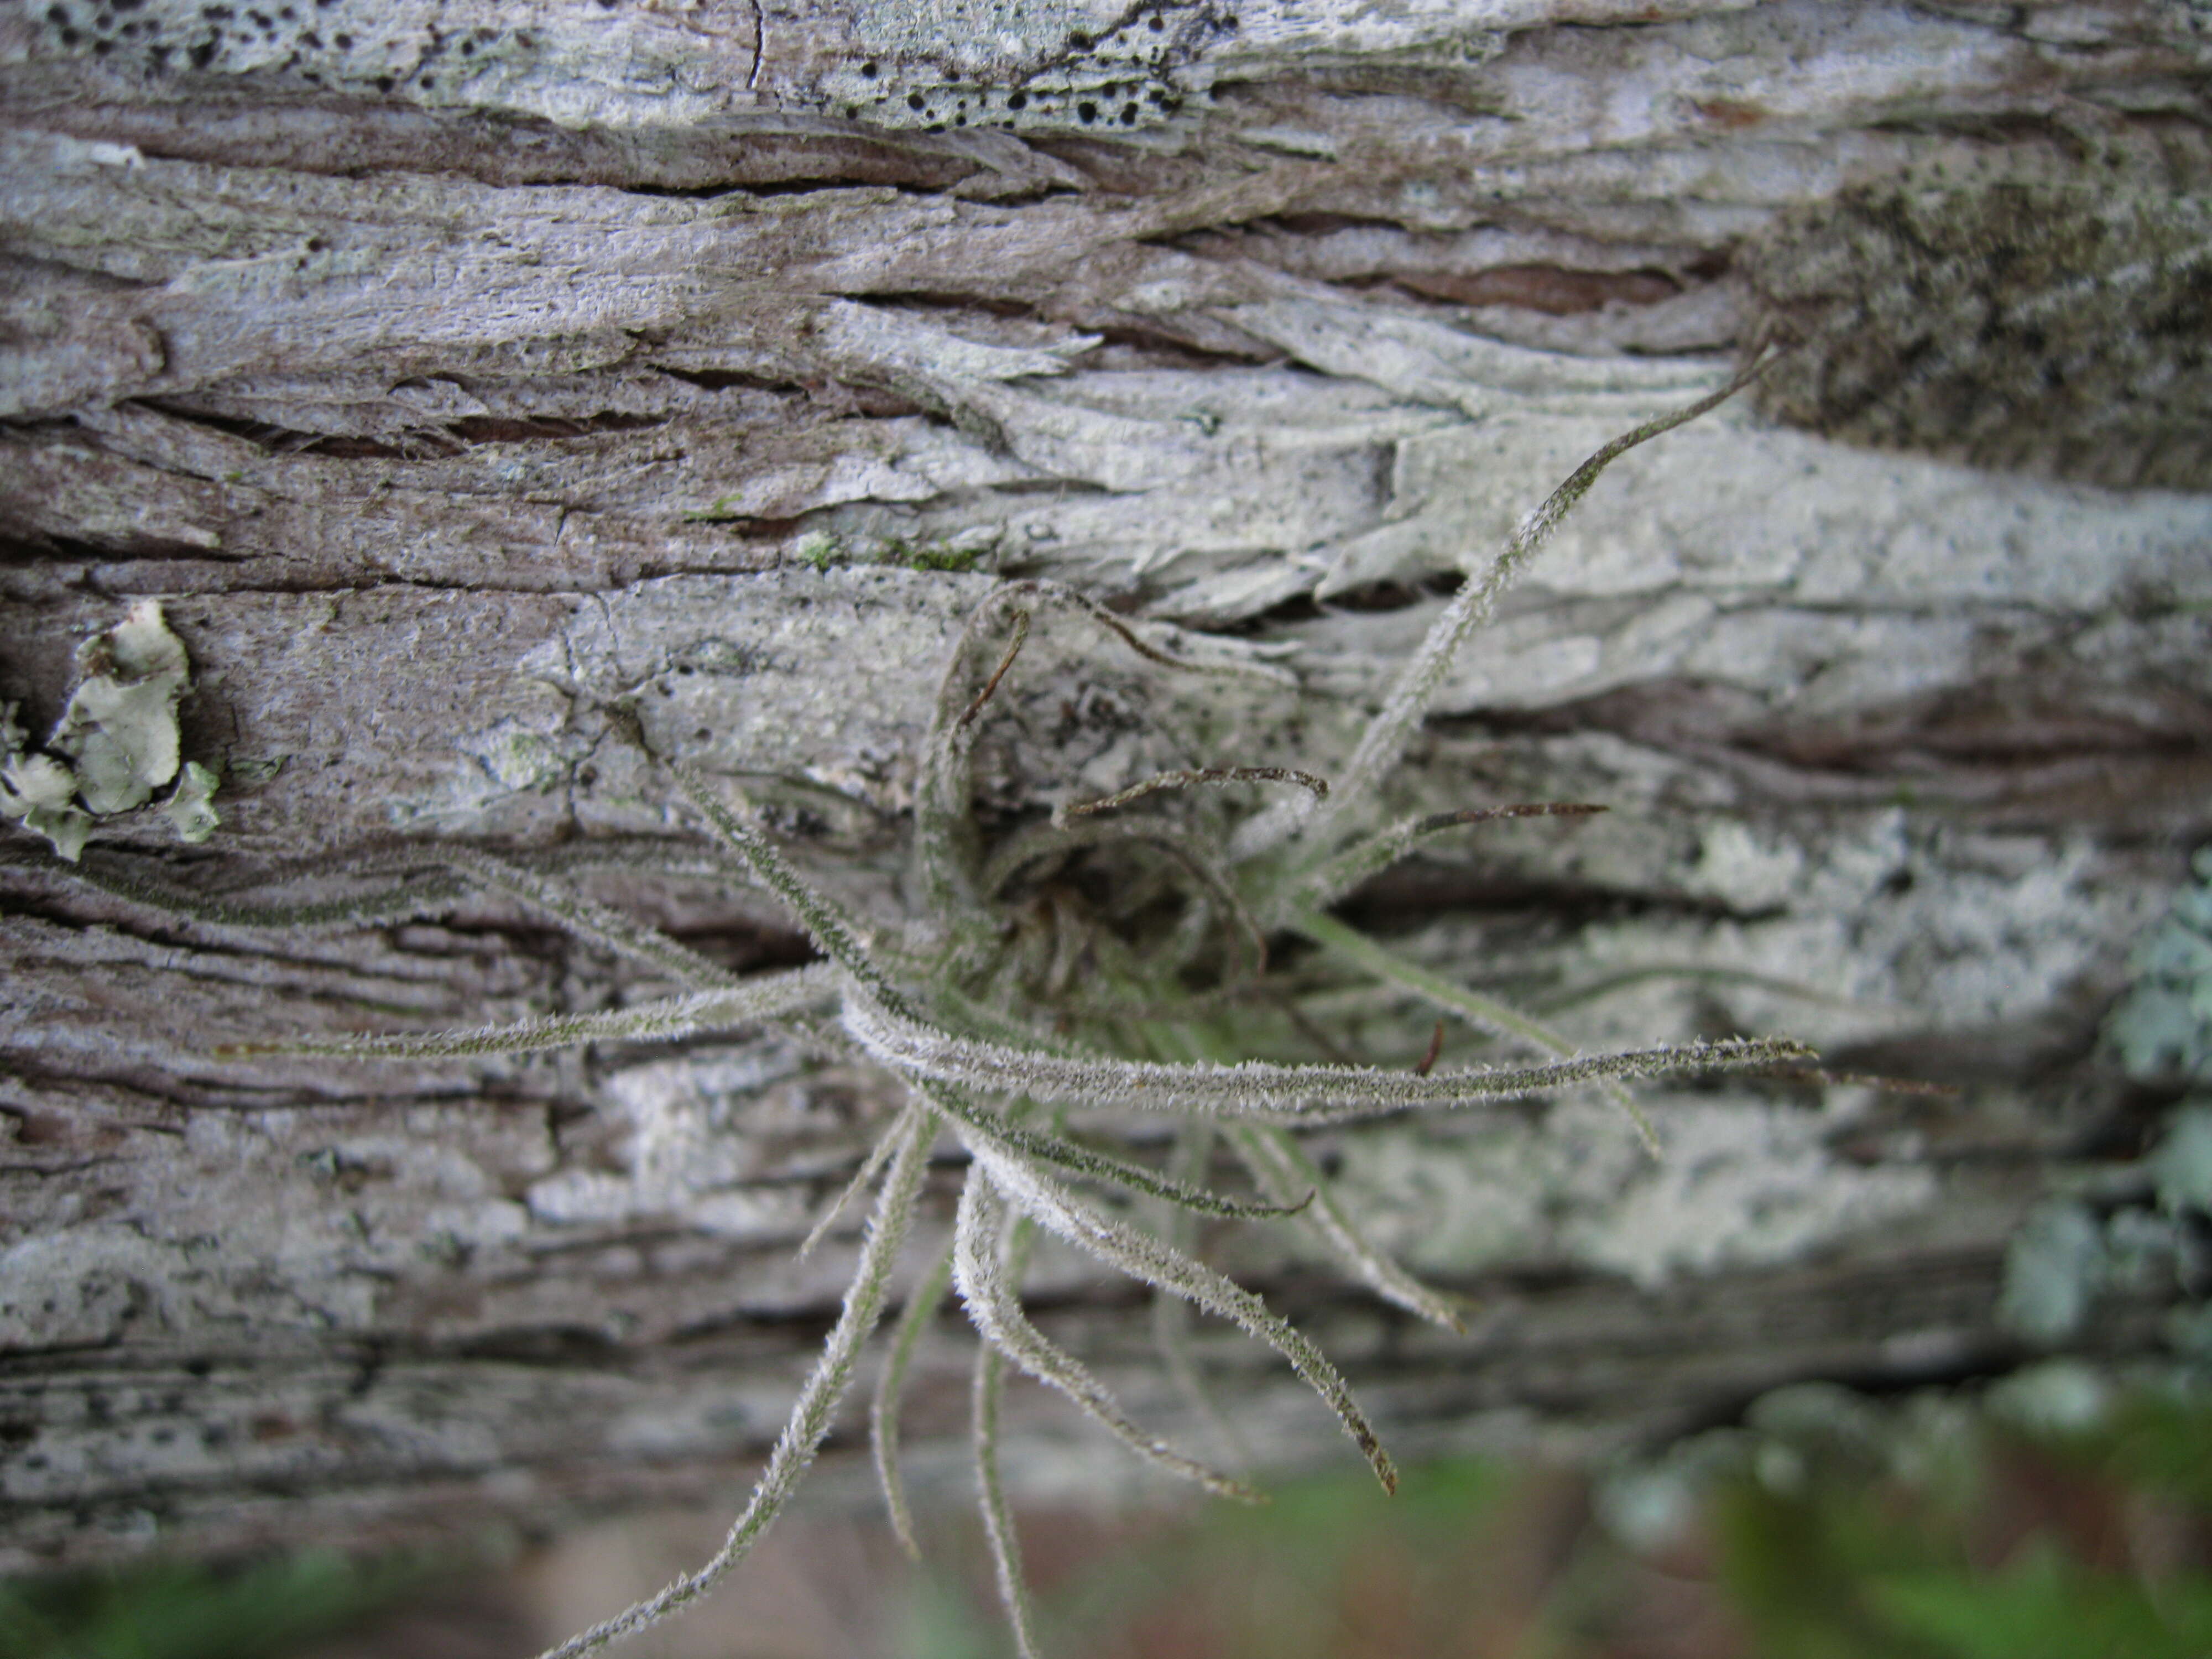 Image of ball moss